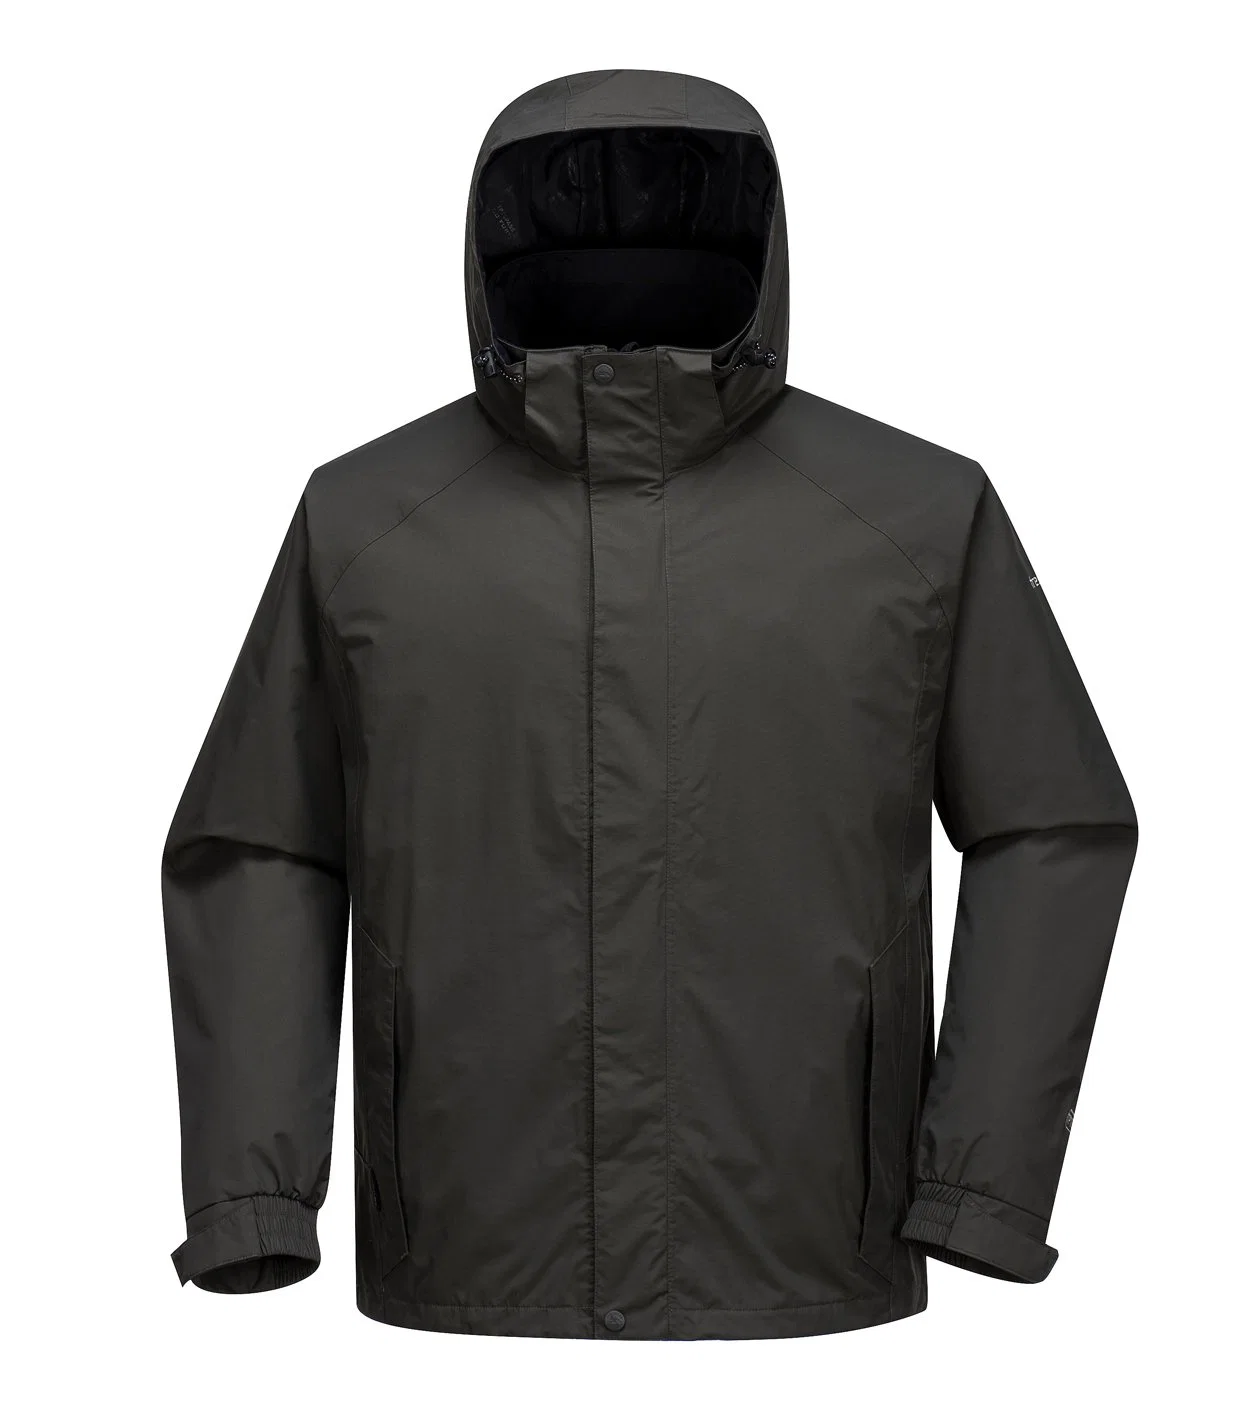 Los hombres chaqueta impermeable Senderismo Windproof ropa al aire libre